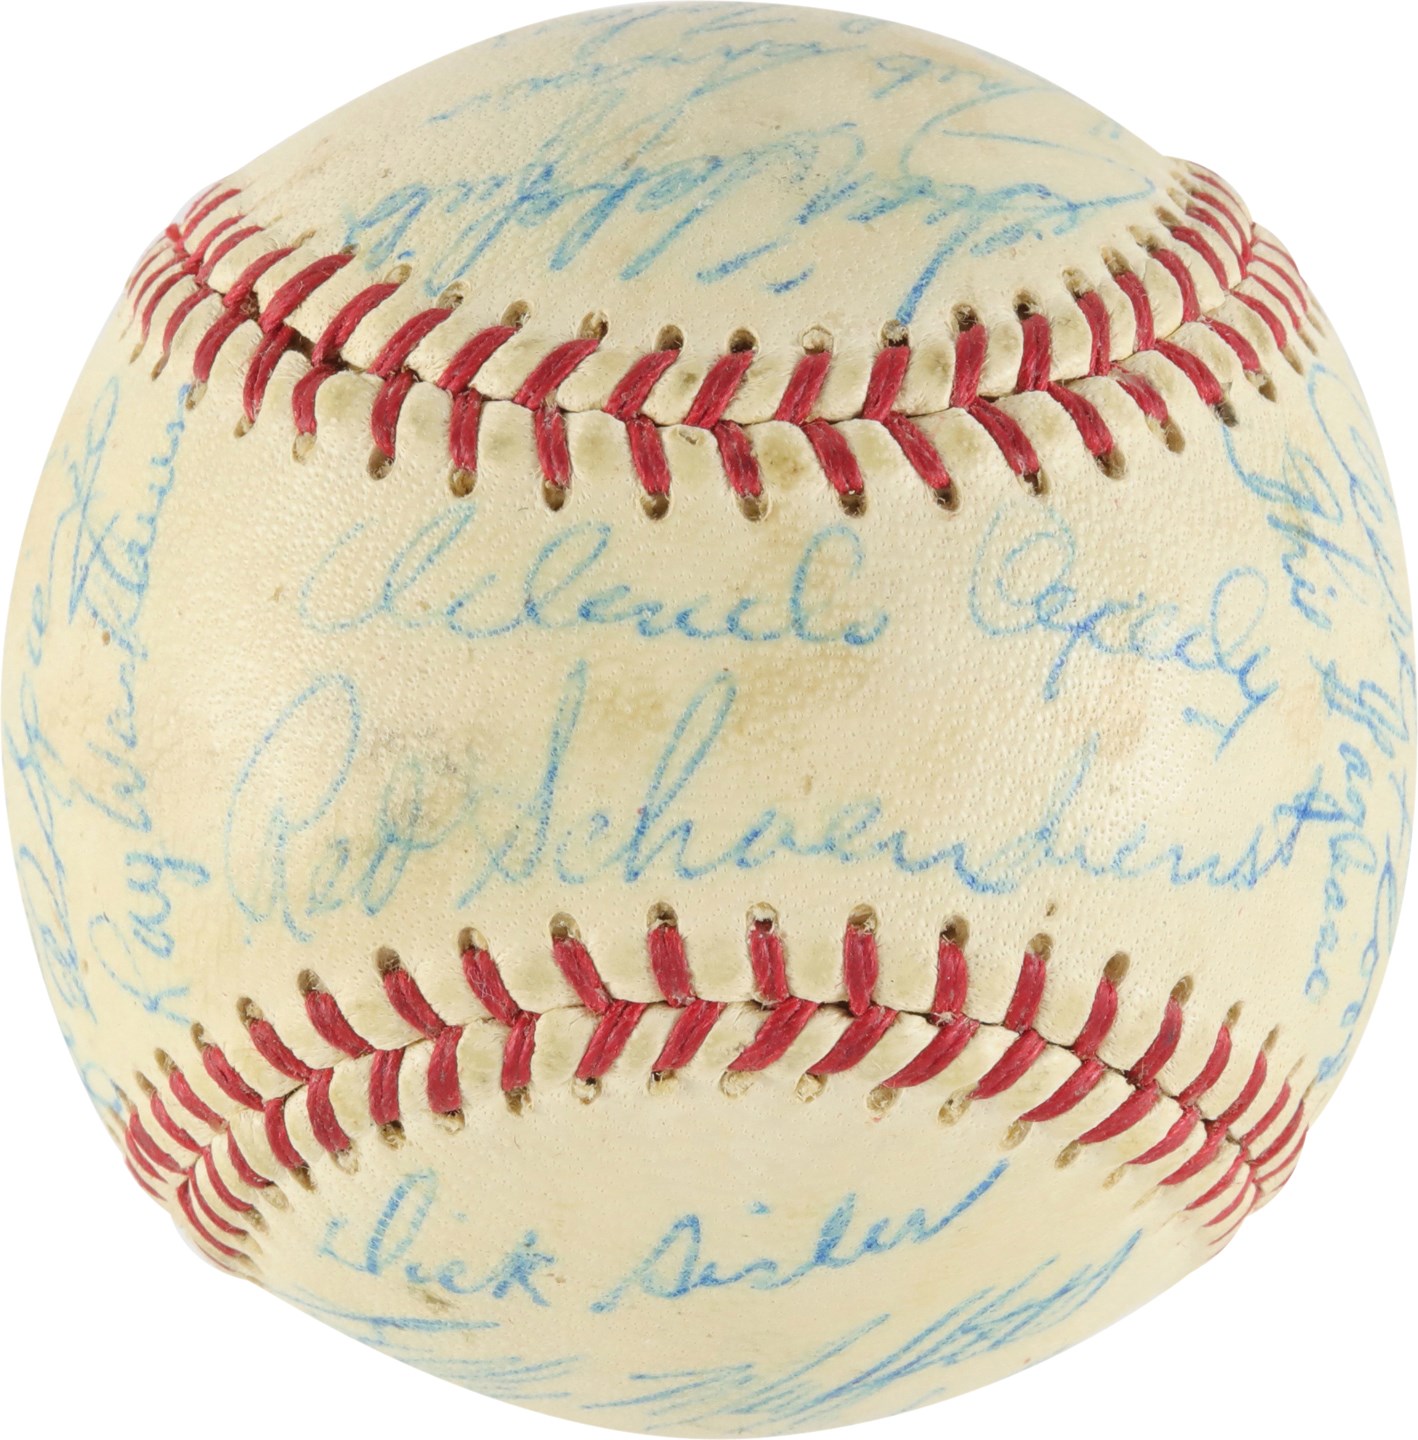 Baseball Autographs - 1968 St. Louis Cardinals National League Champion Team-Signed Baseball (JSA)